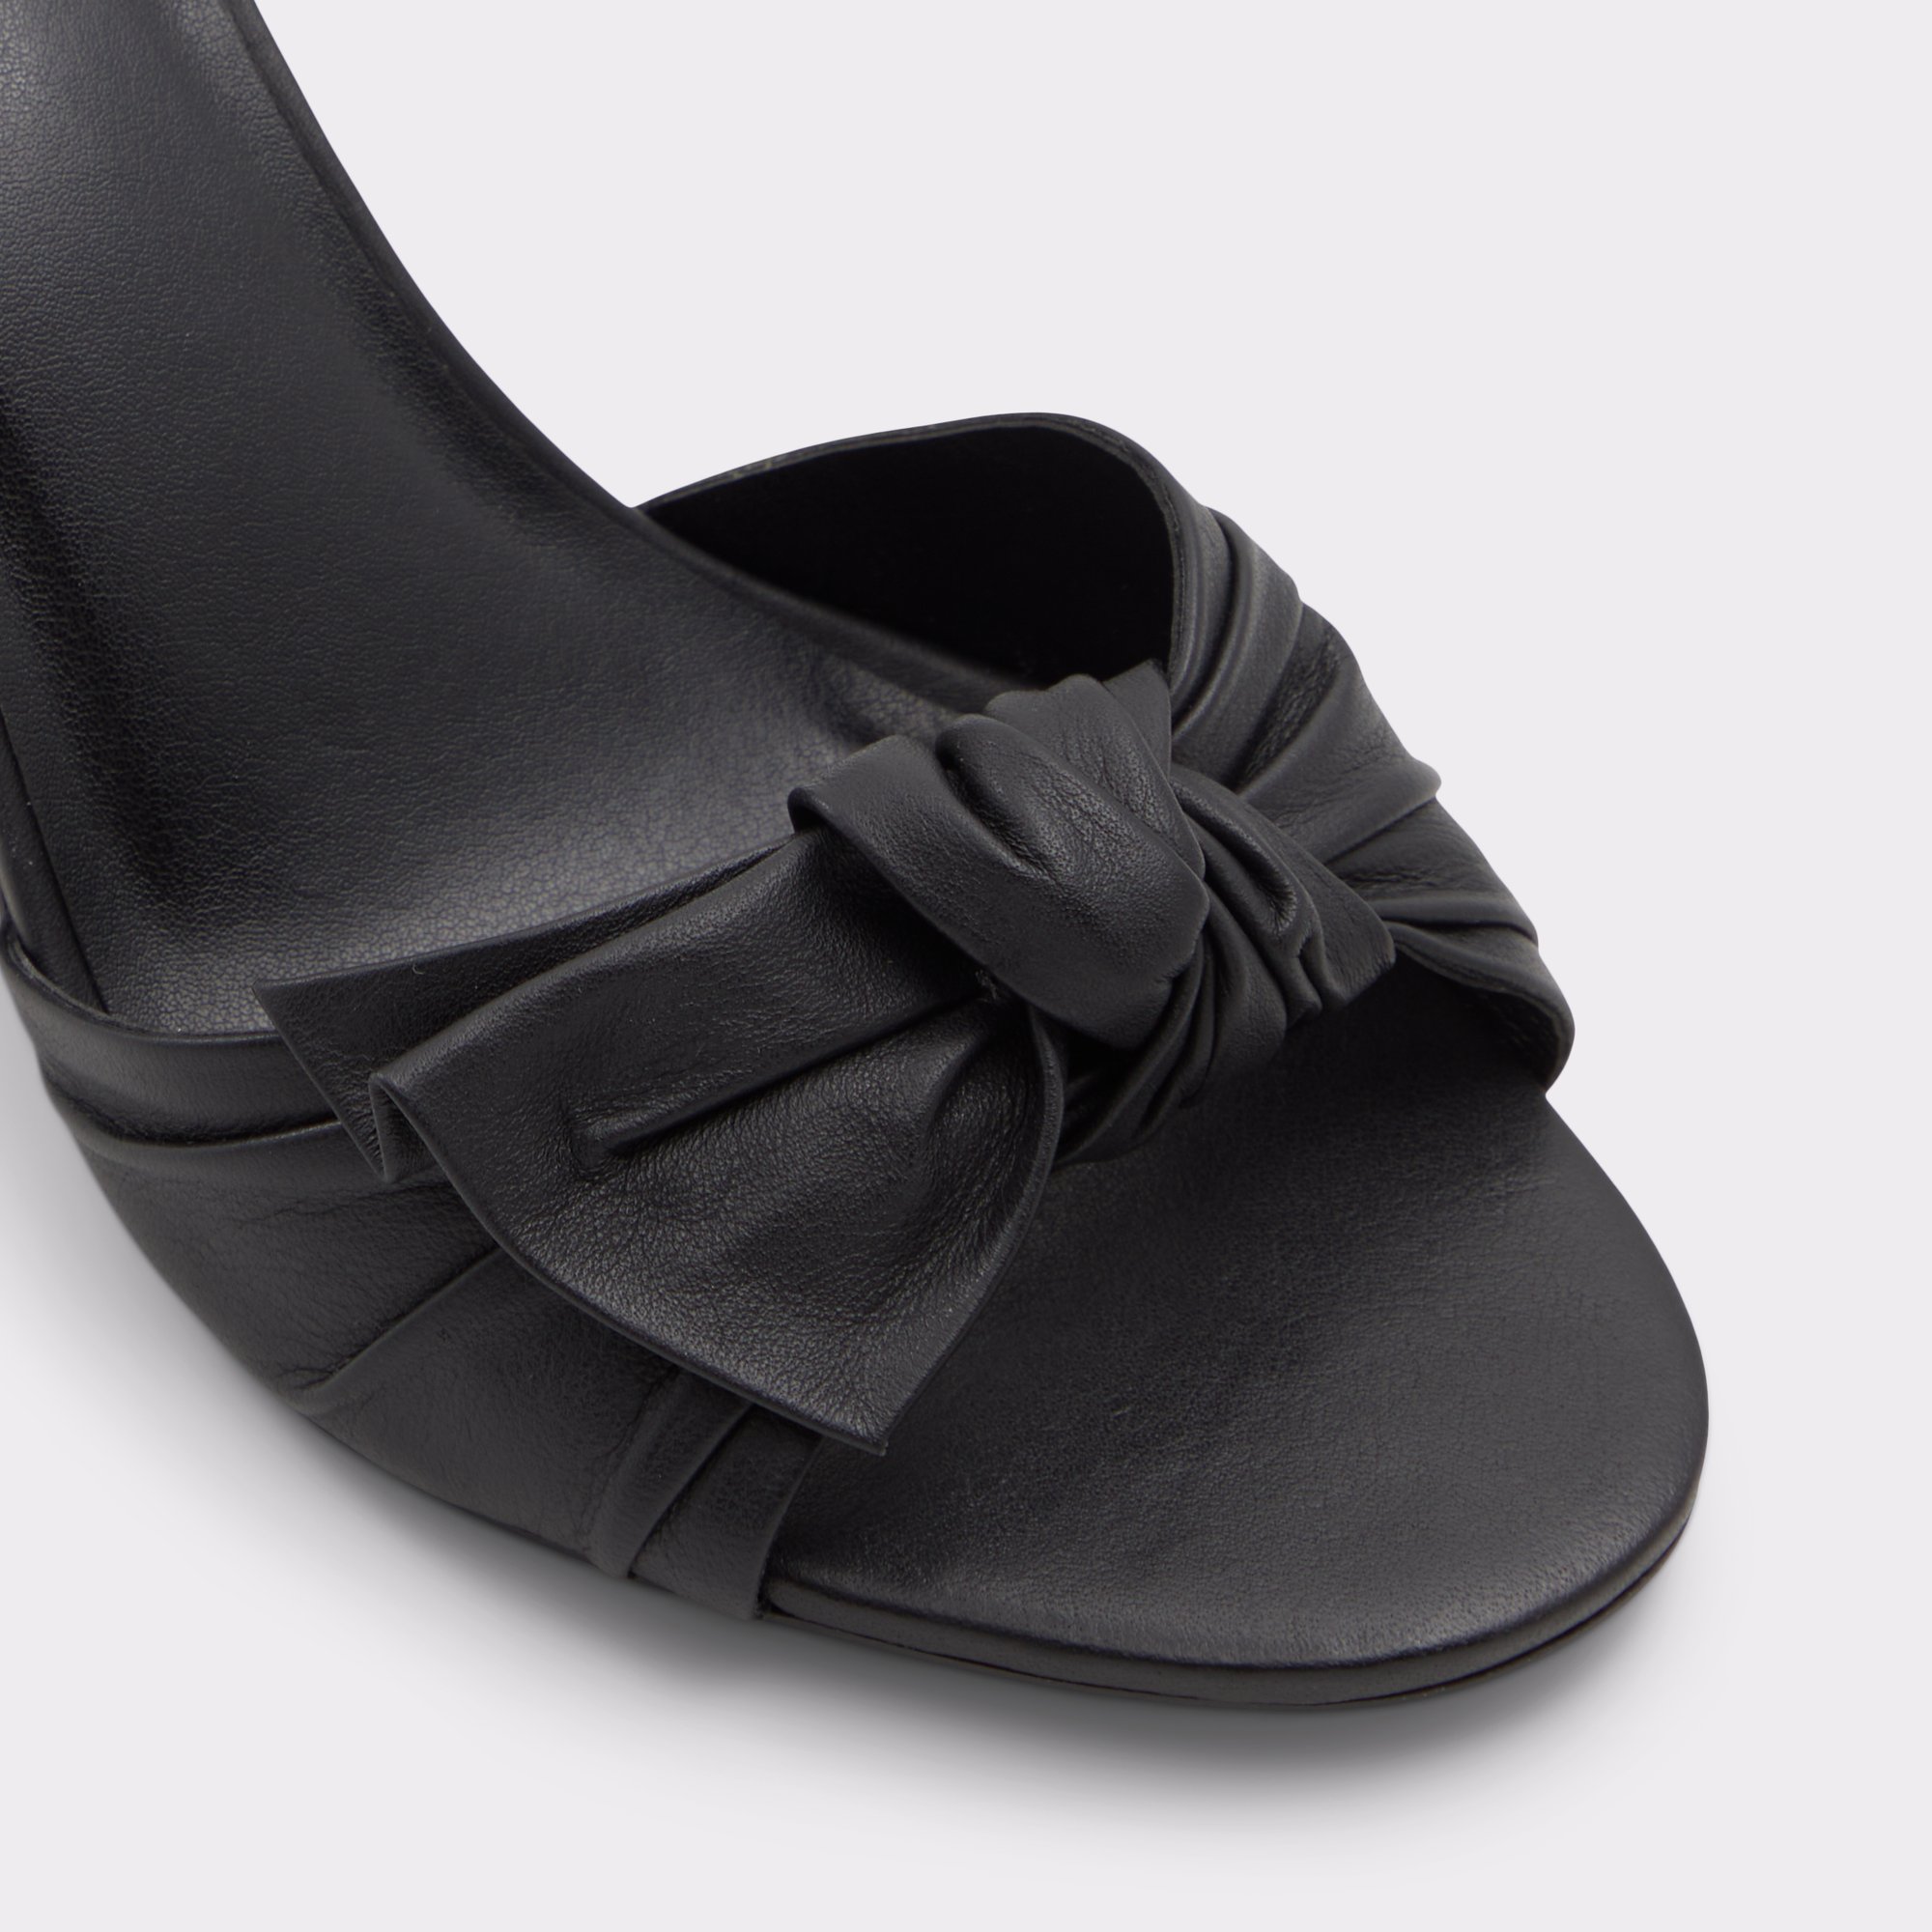 Angelbow Black Women's Strappy sandals | ALDO Canada